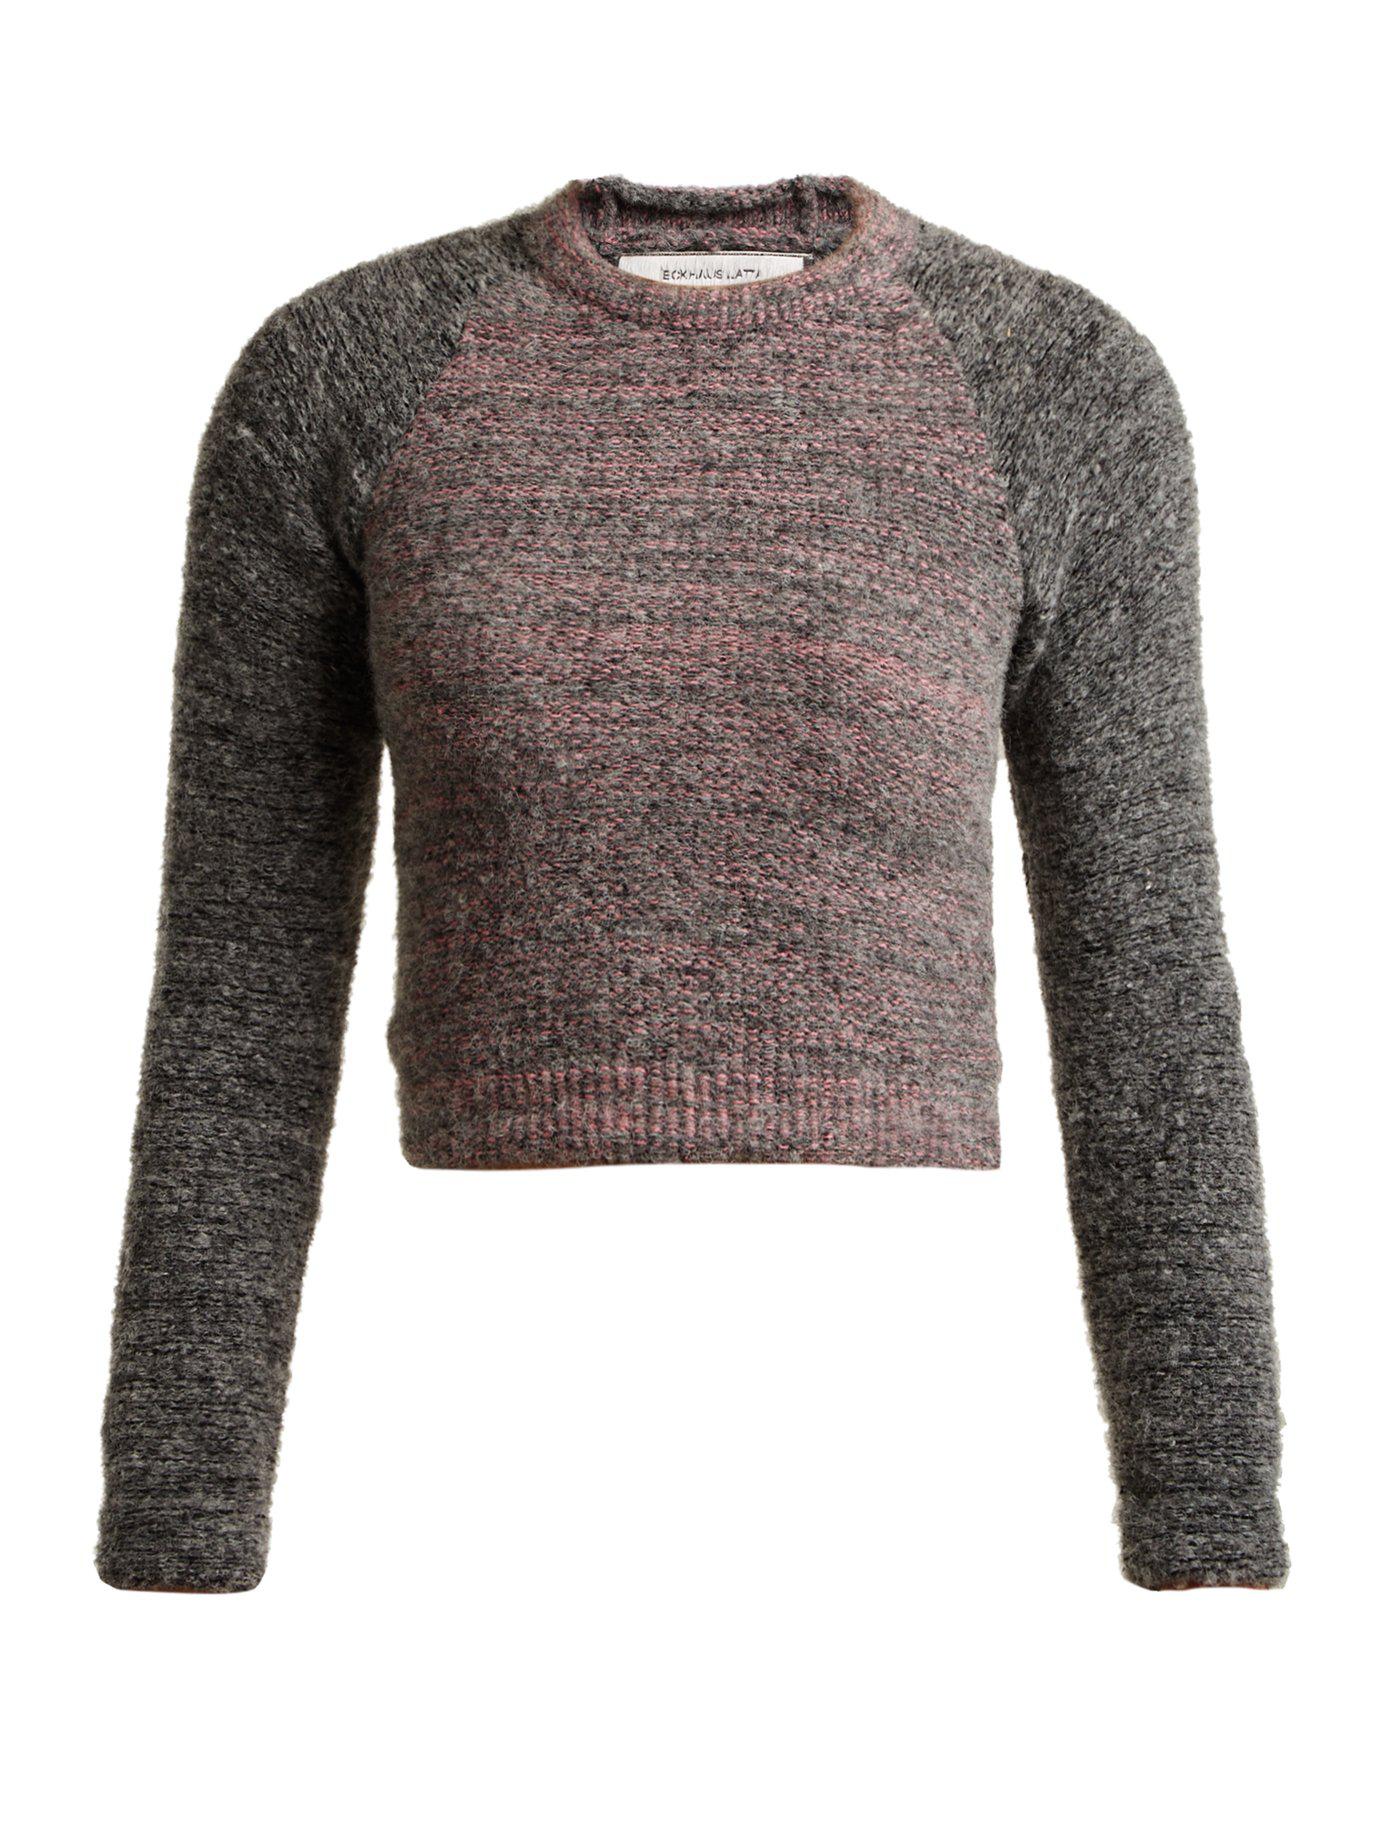 Eckhaus Latta Raglan Sleeve Alpaca Blend Cropped Sweater in Gray - Lyst